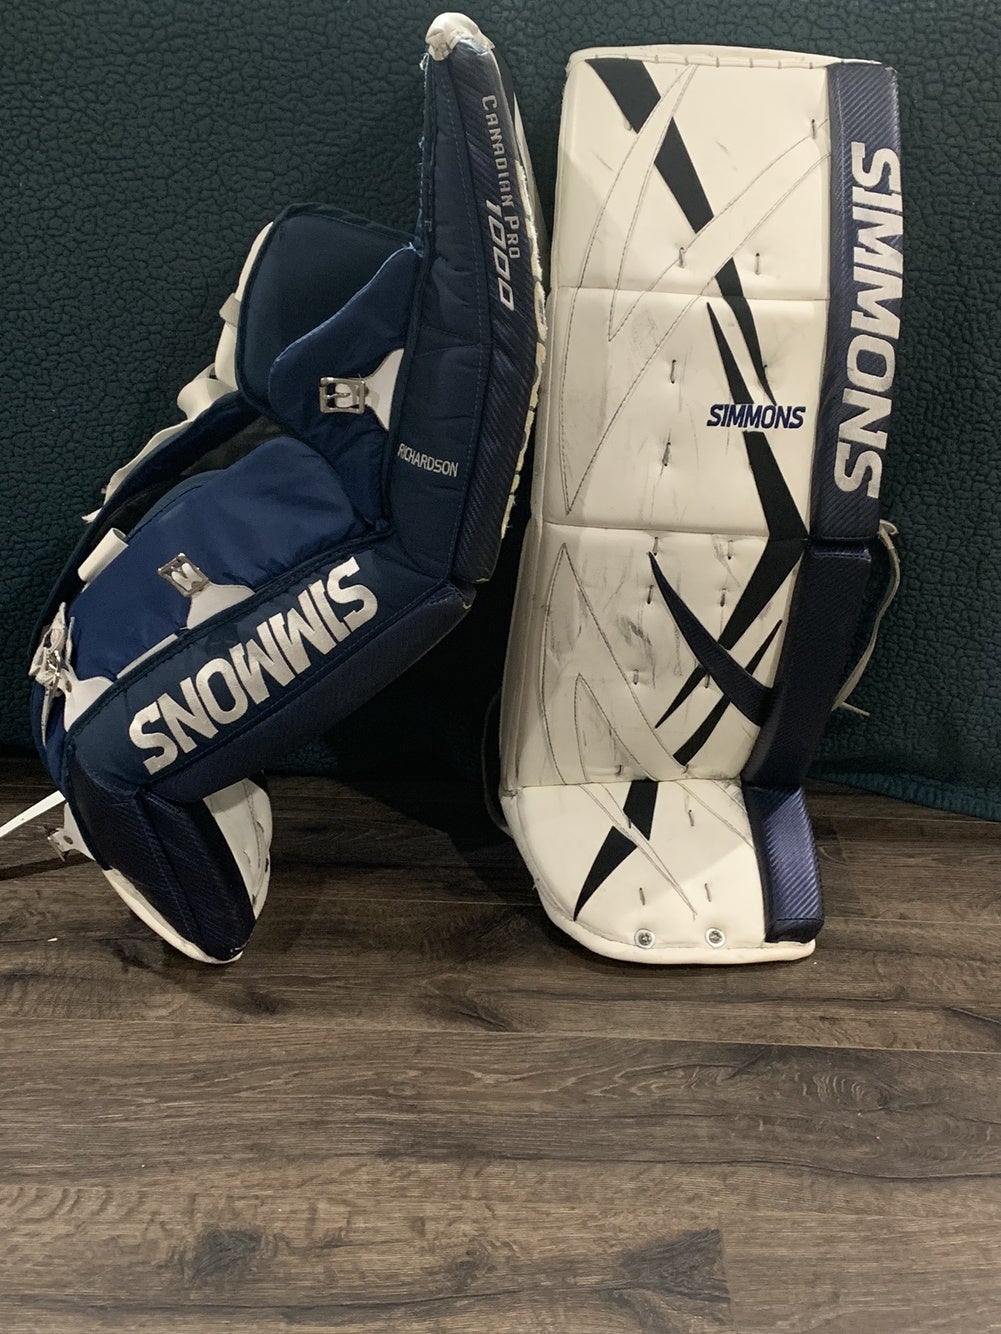 Senior Professional Series Goalie Equipment - Simmons Hockey